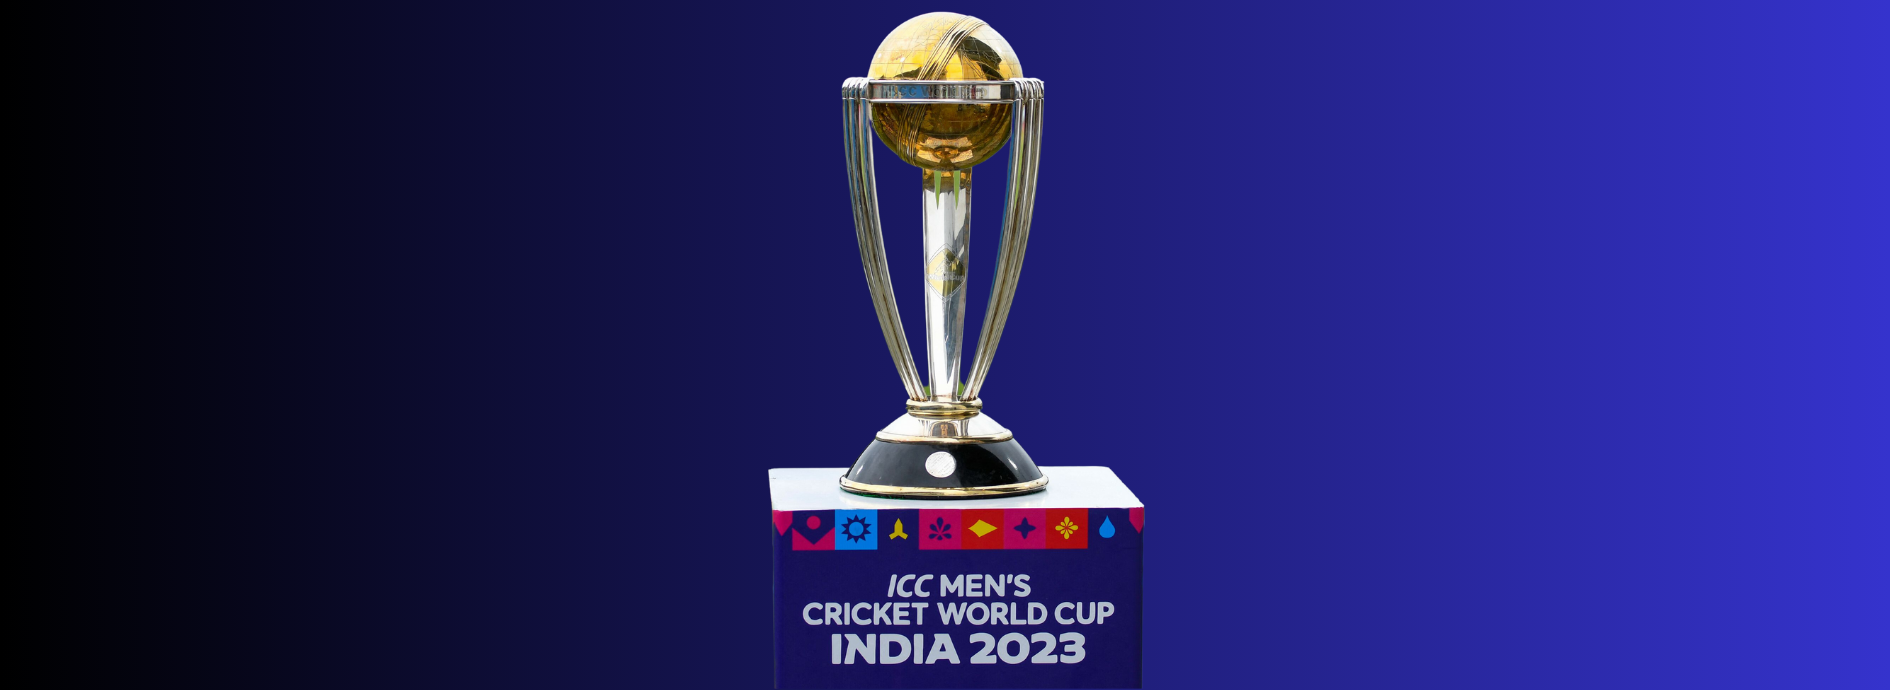 ICC CRICKET WORLD CUP 2023 winner